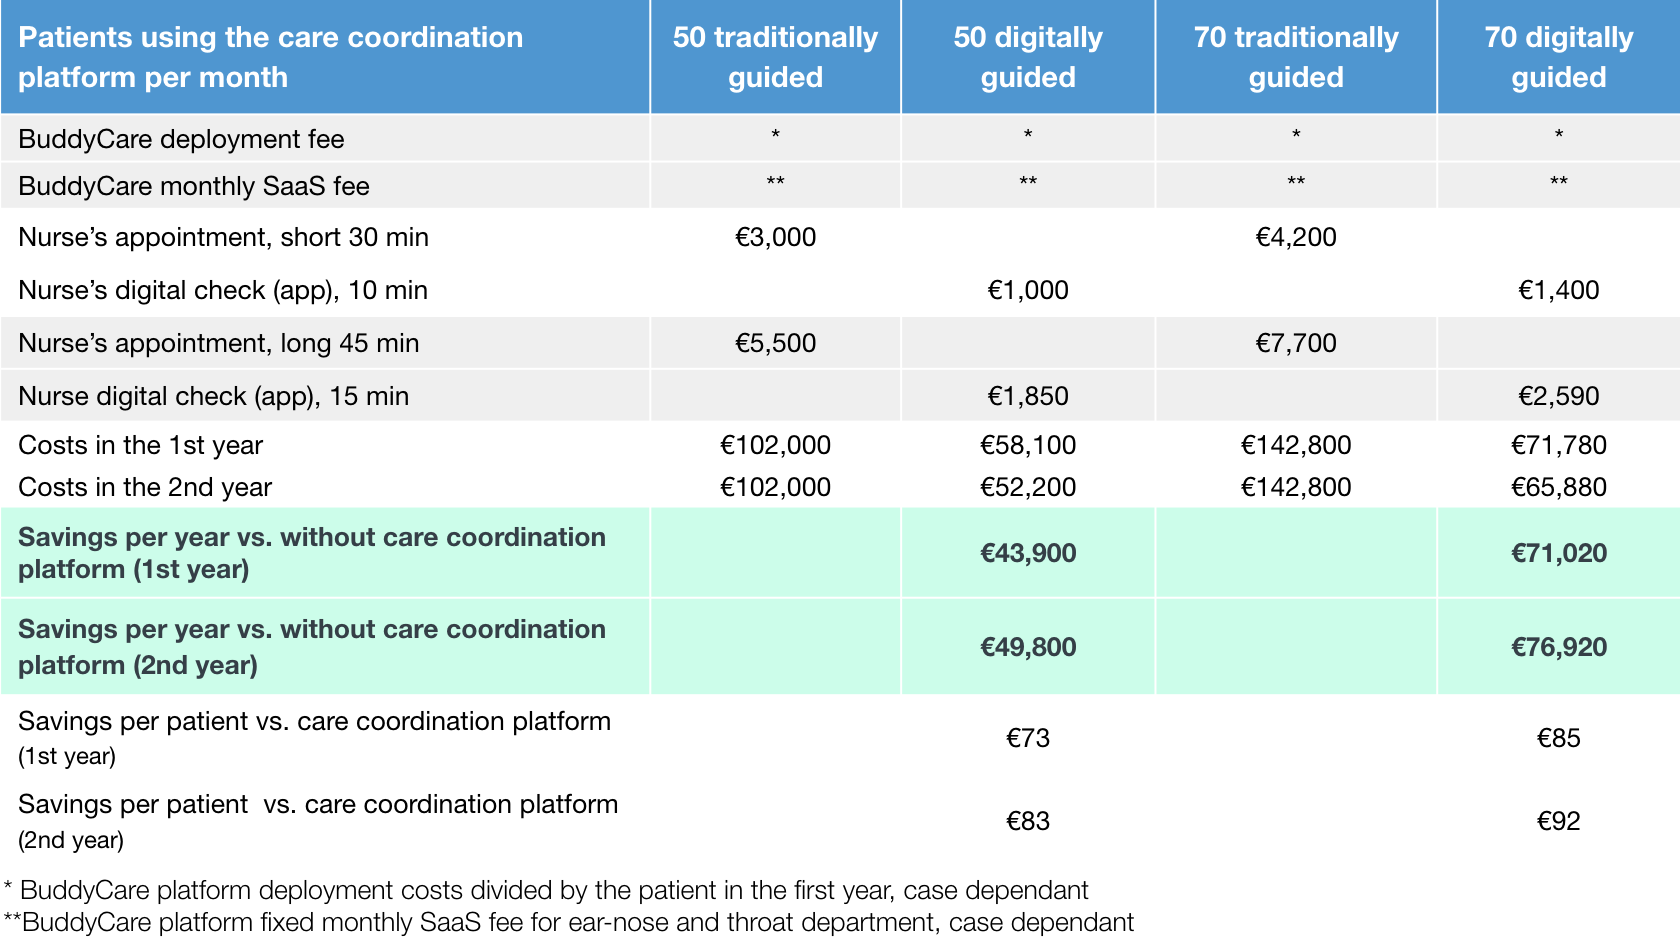 economical impact of care coordination platform calculations